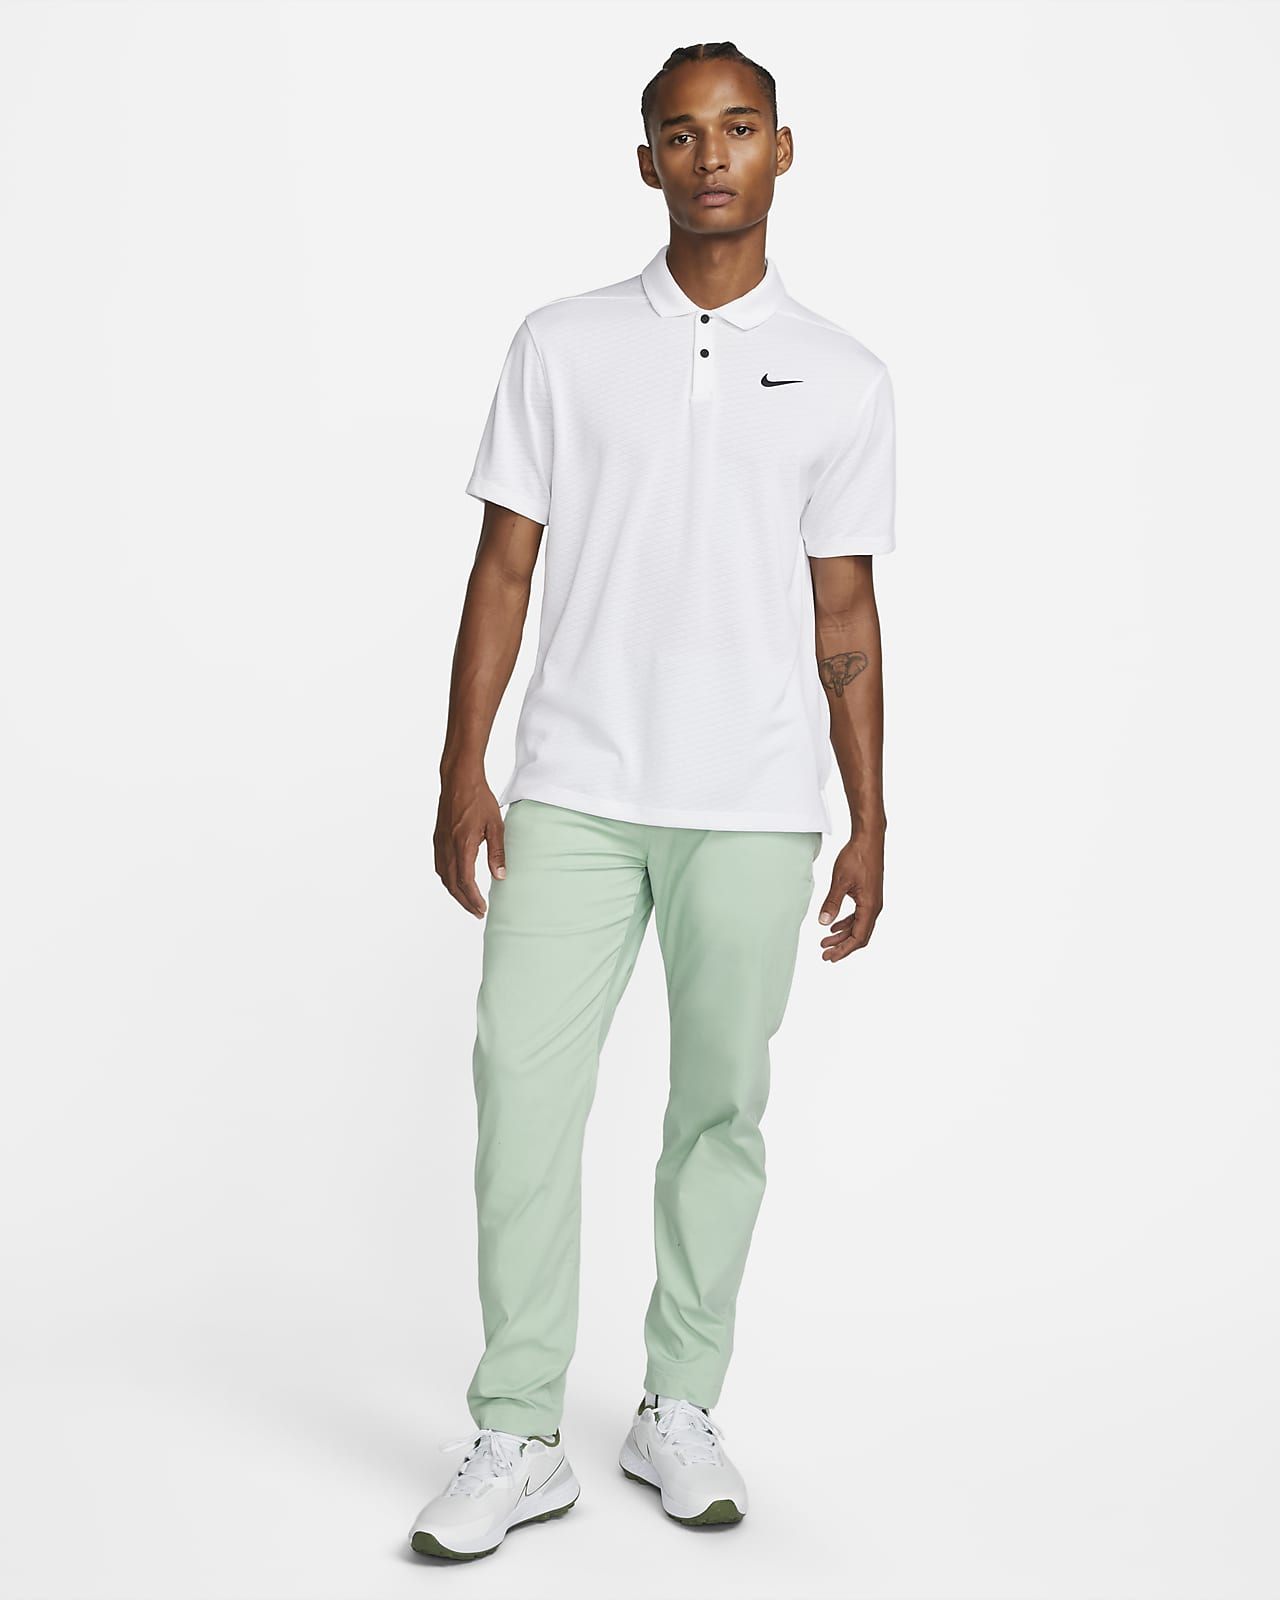 Nike Men's Chino Golf Pants